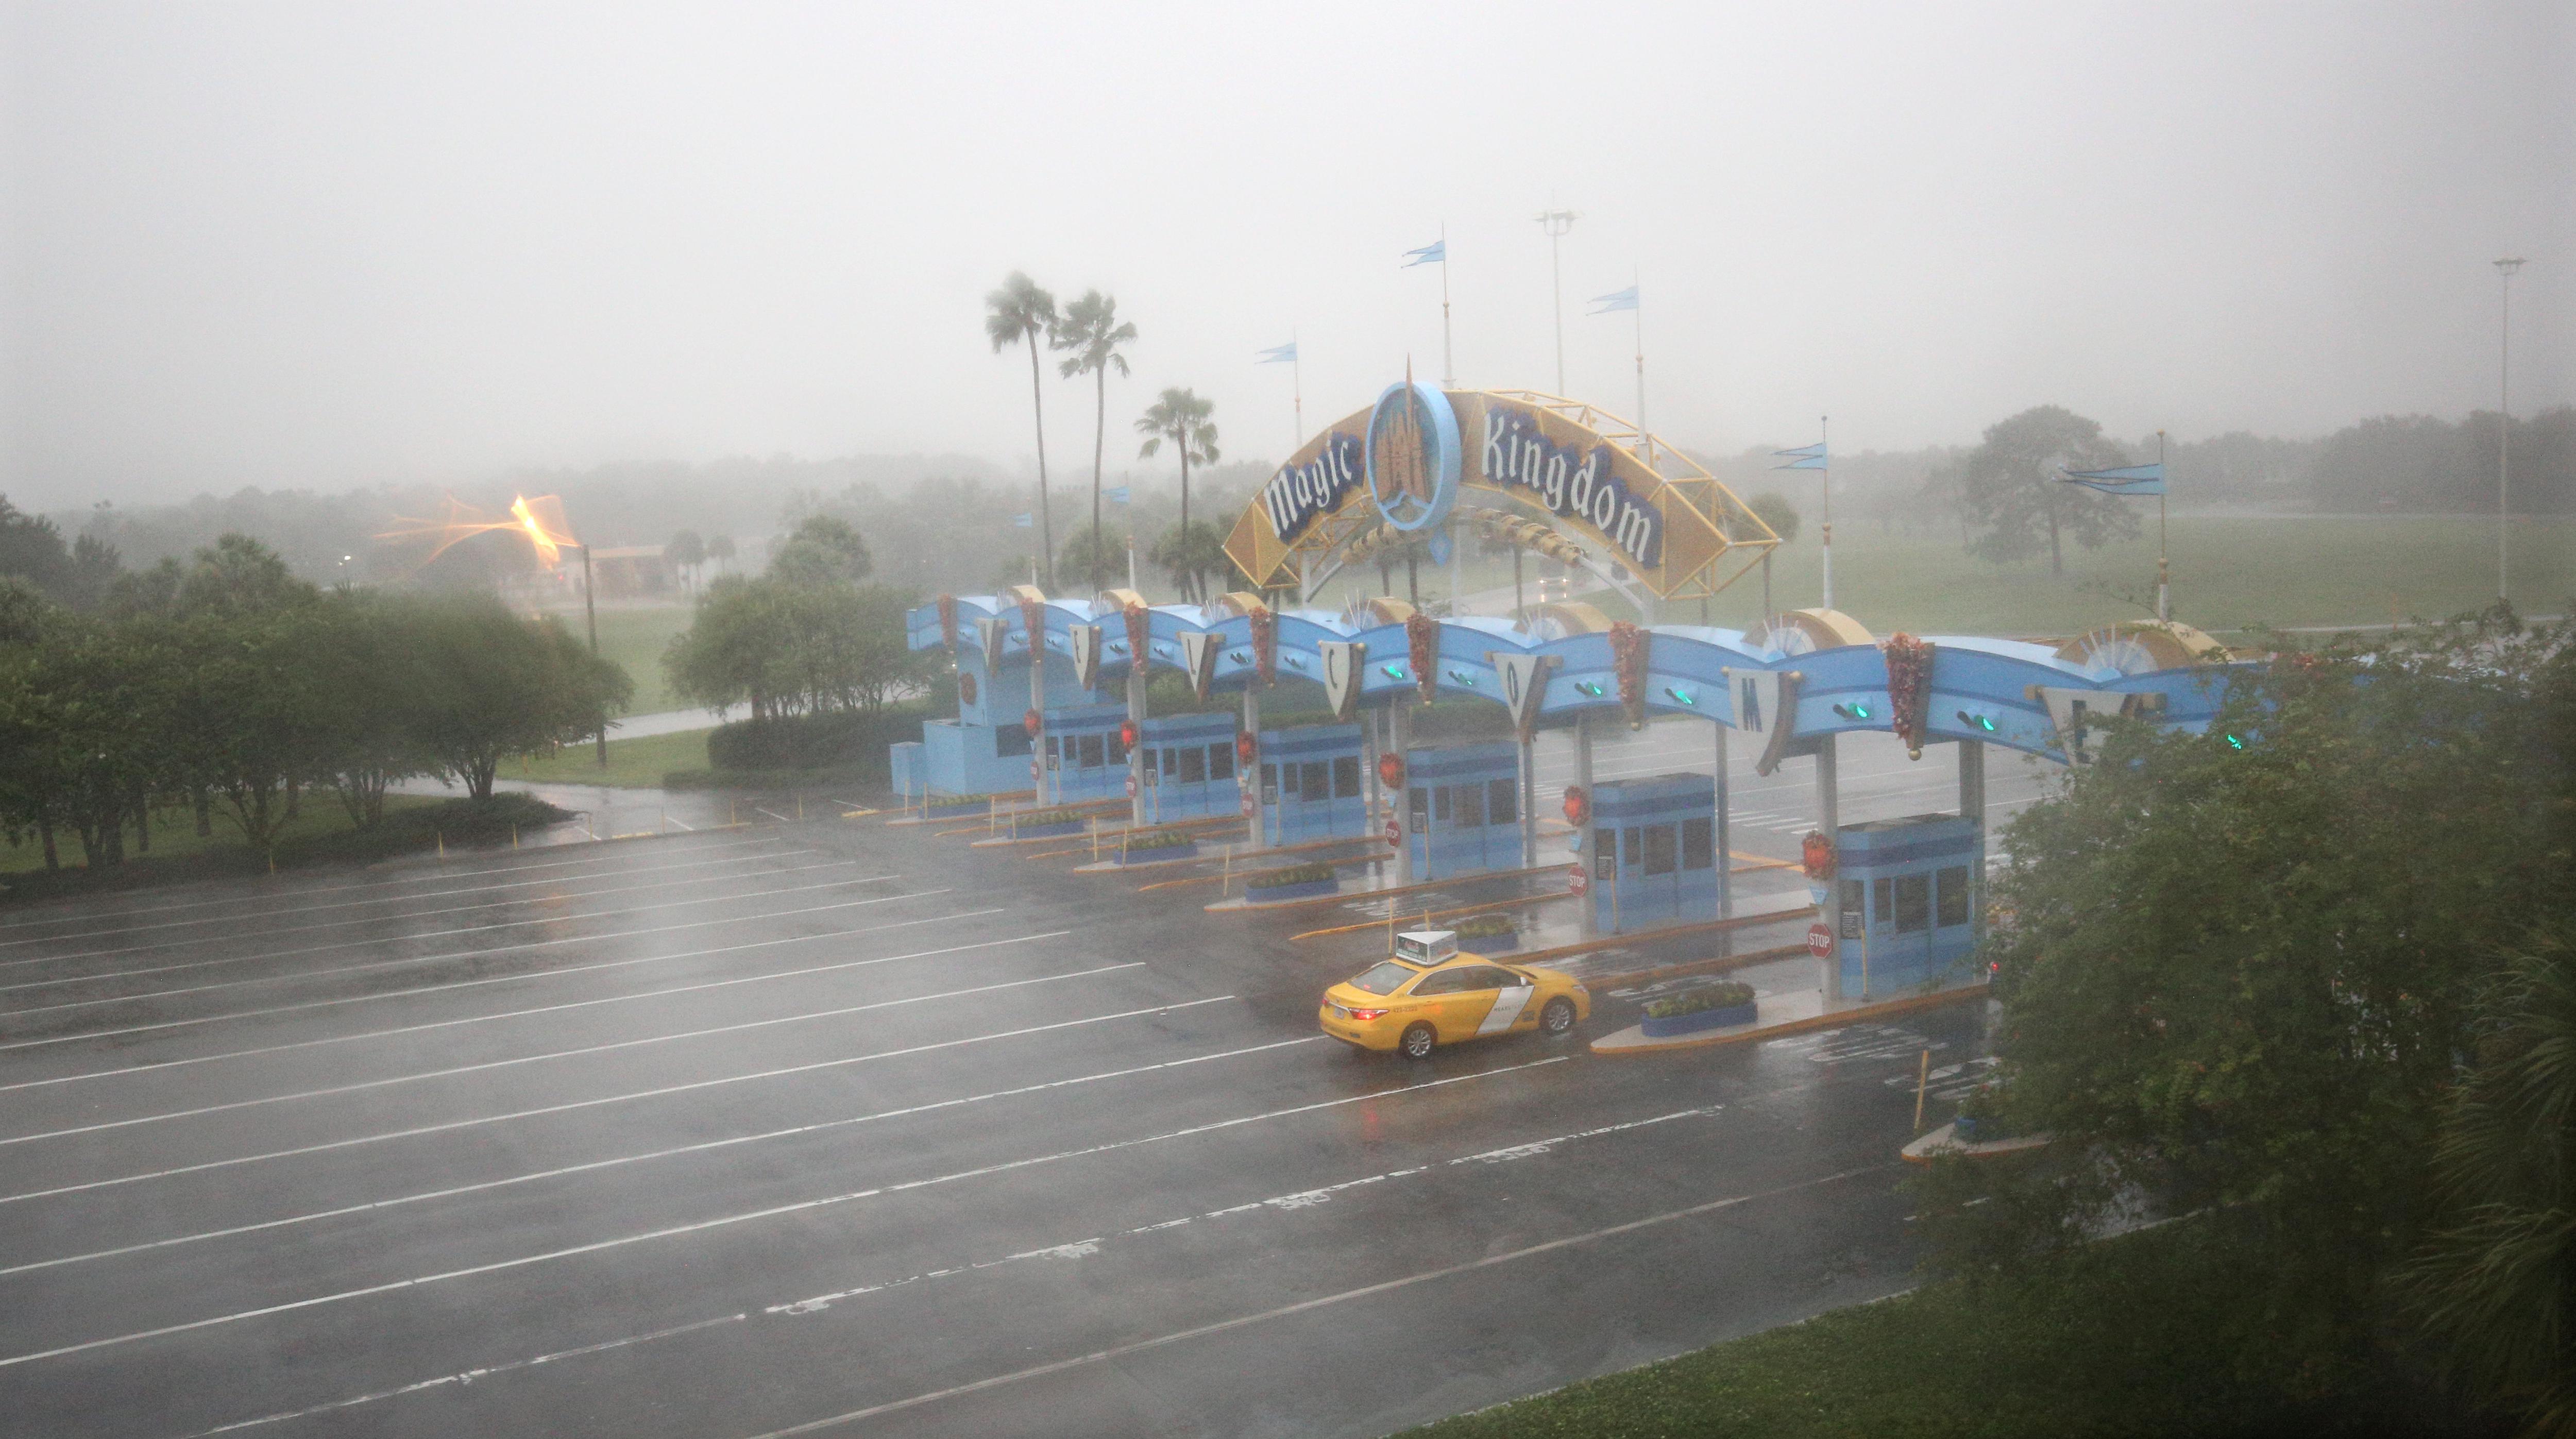 Walt Disney World Resort area in Orlando, Florida (AFP PHOTO)